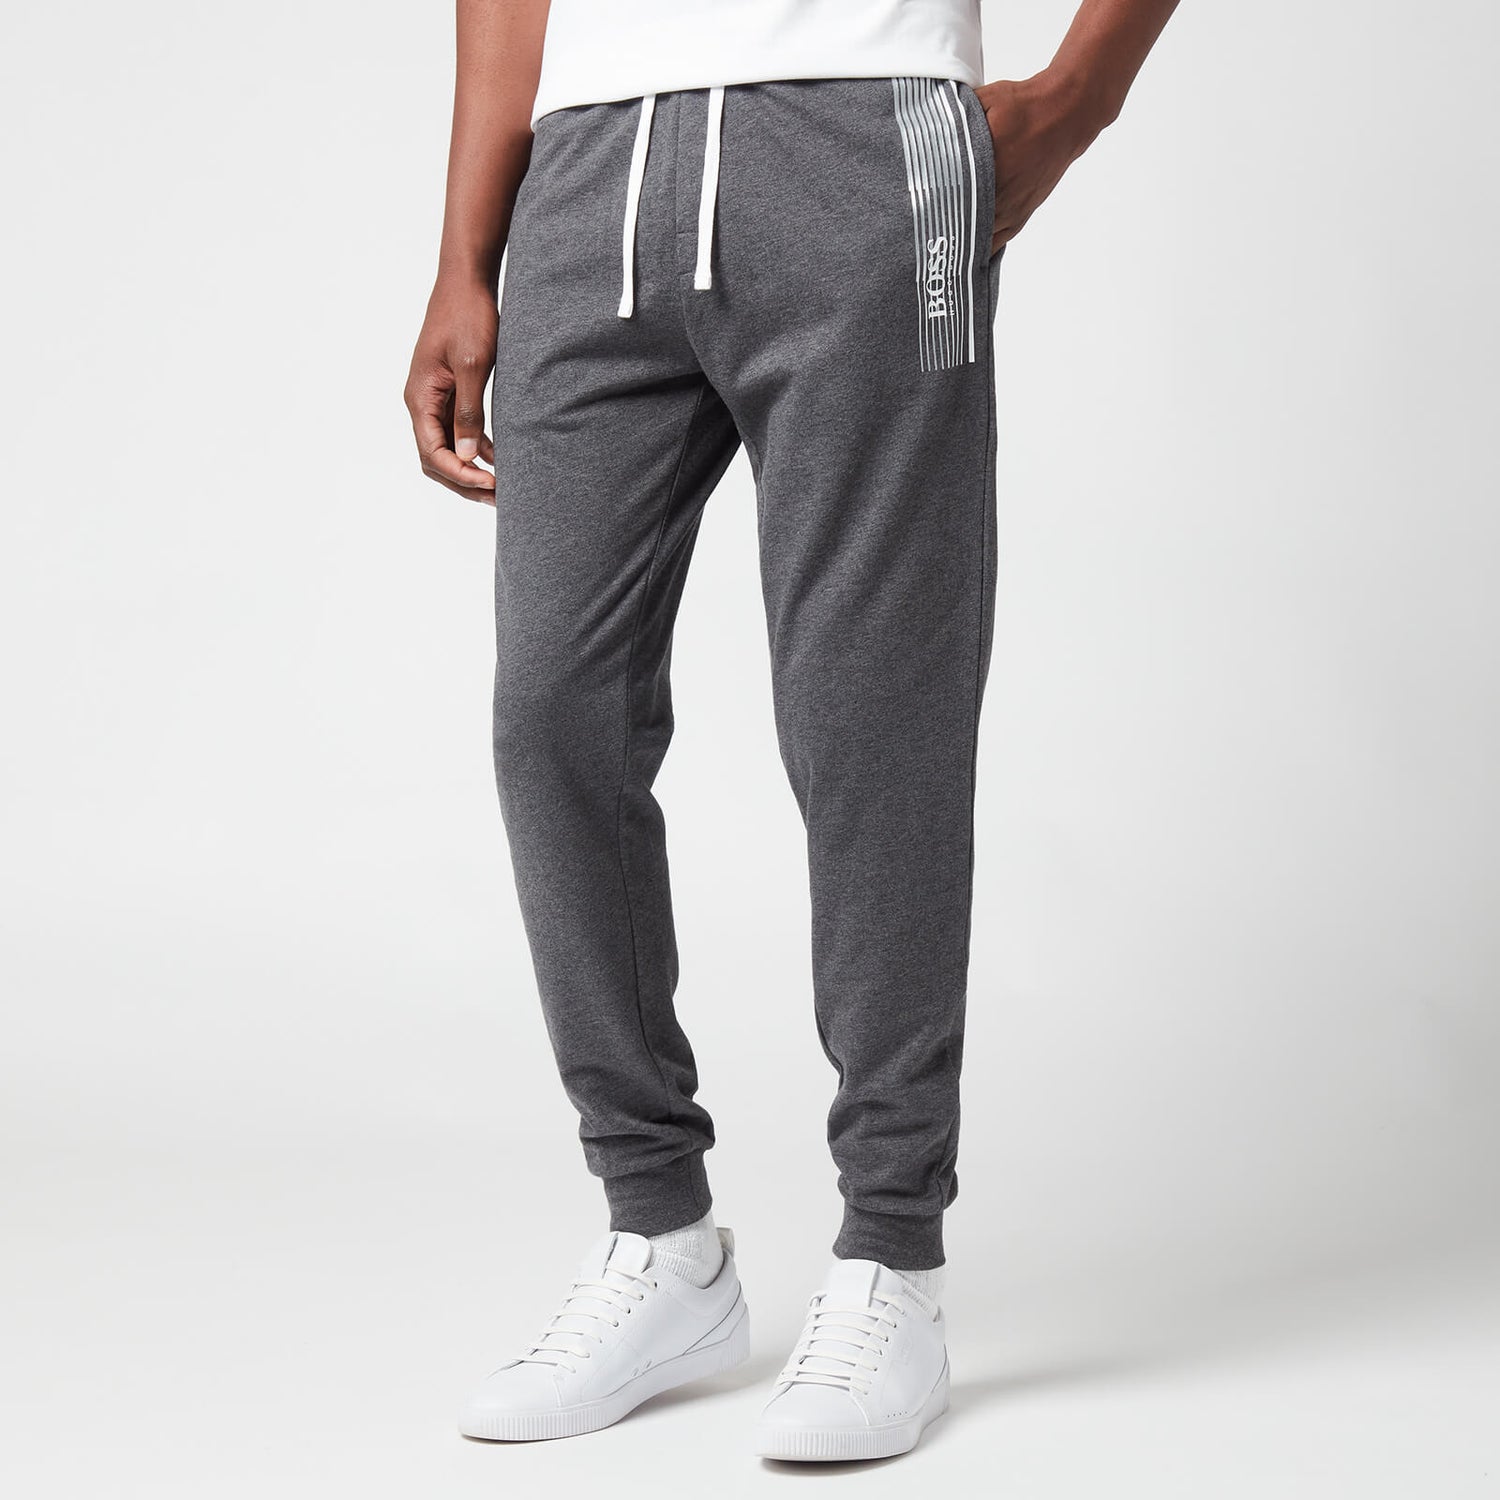 BOSS Bodywear Men's Authentic Pants - Medium Grey